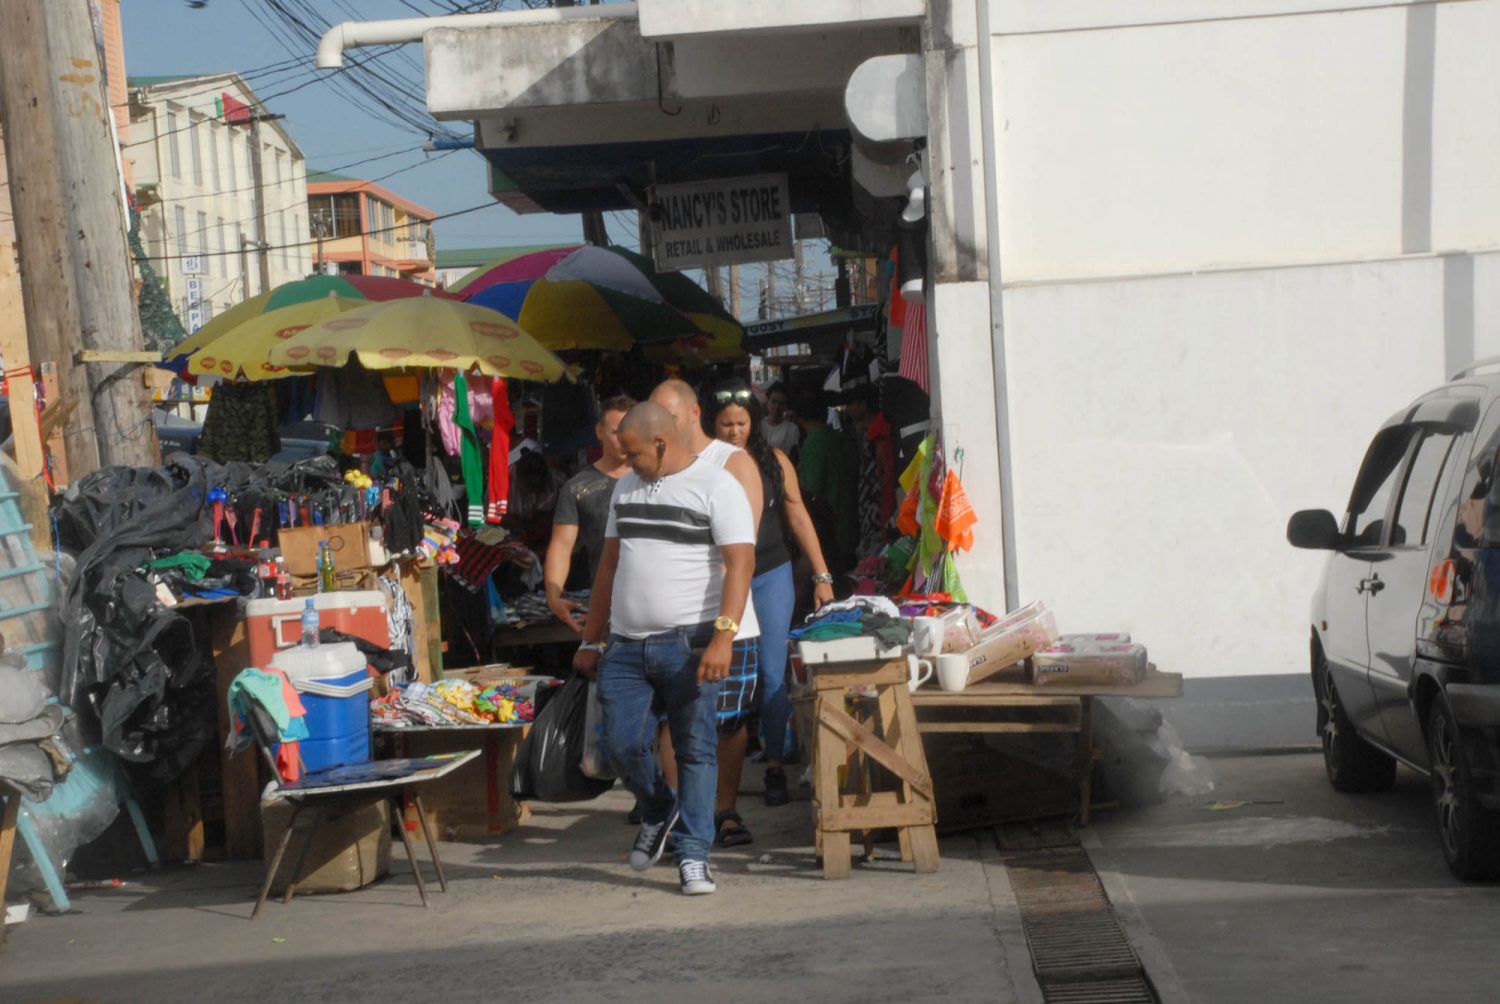 Cubans browsing on Regent  the street pavement on Wednesday.